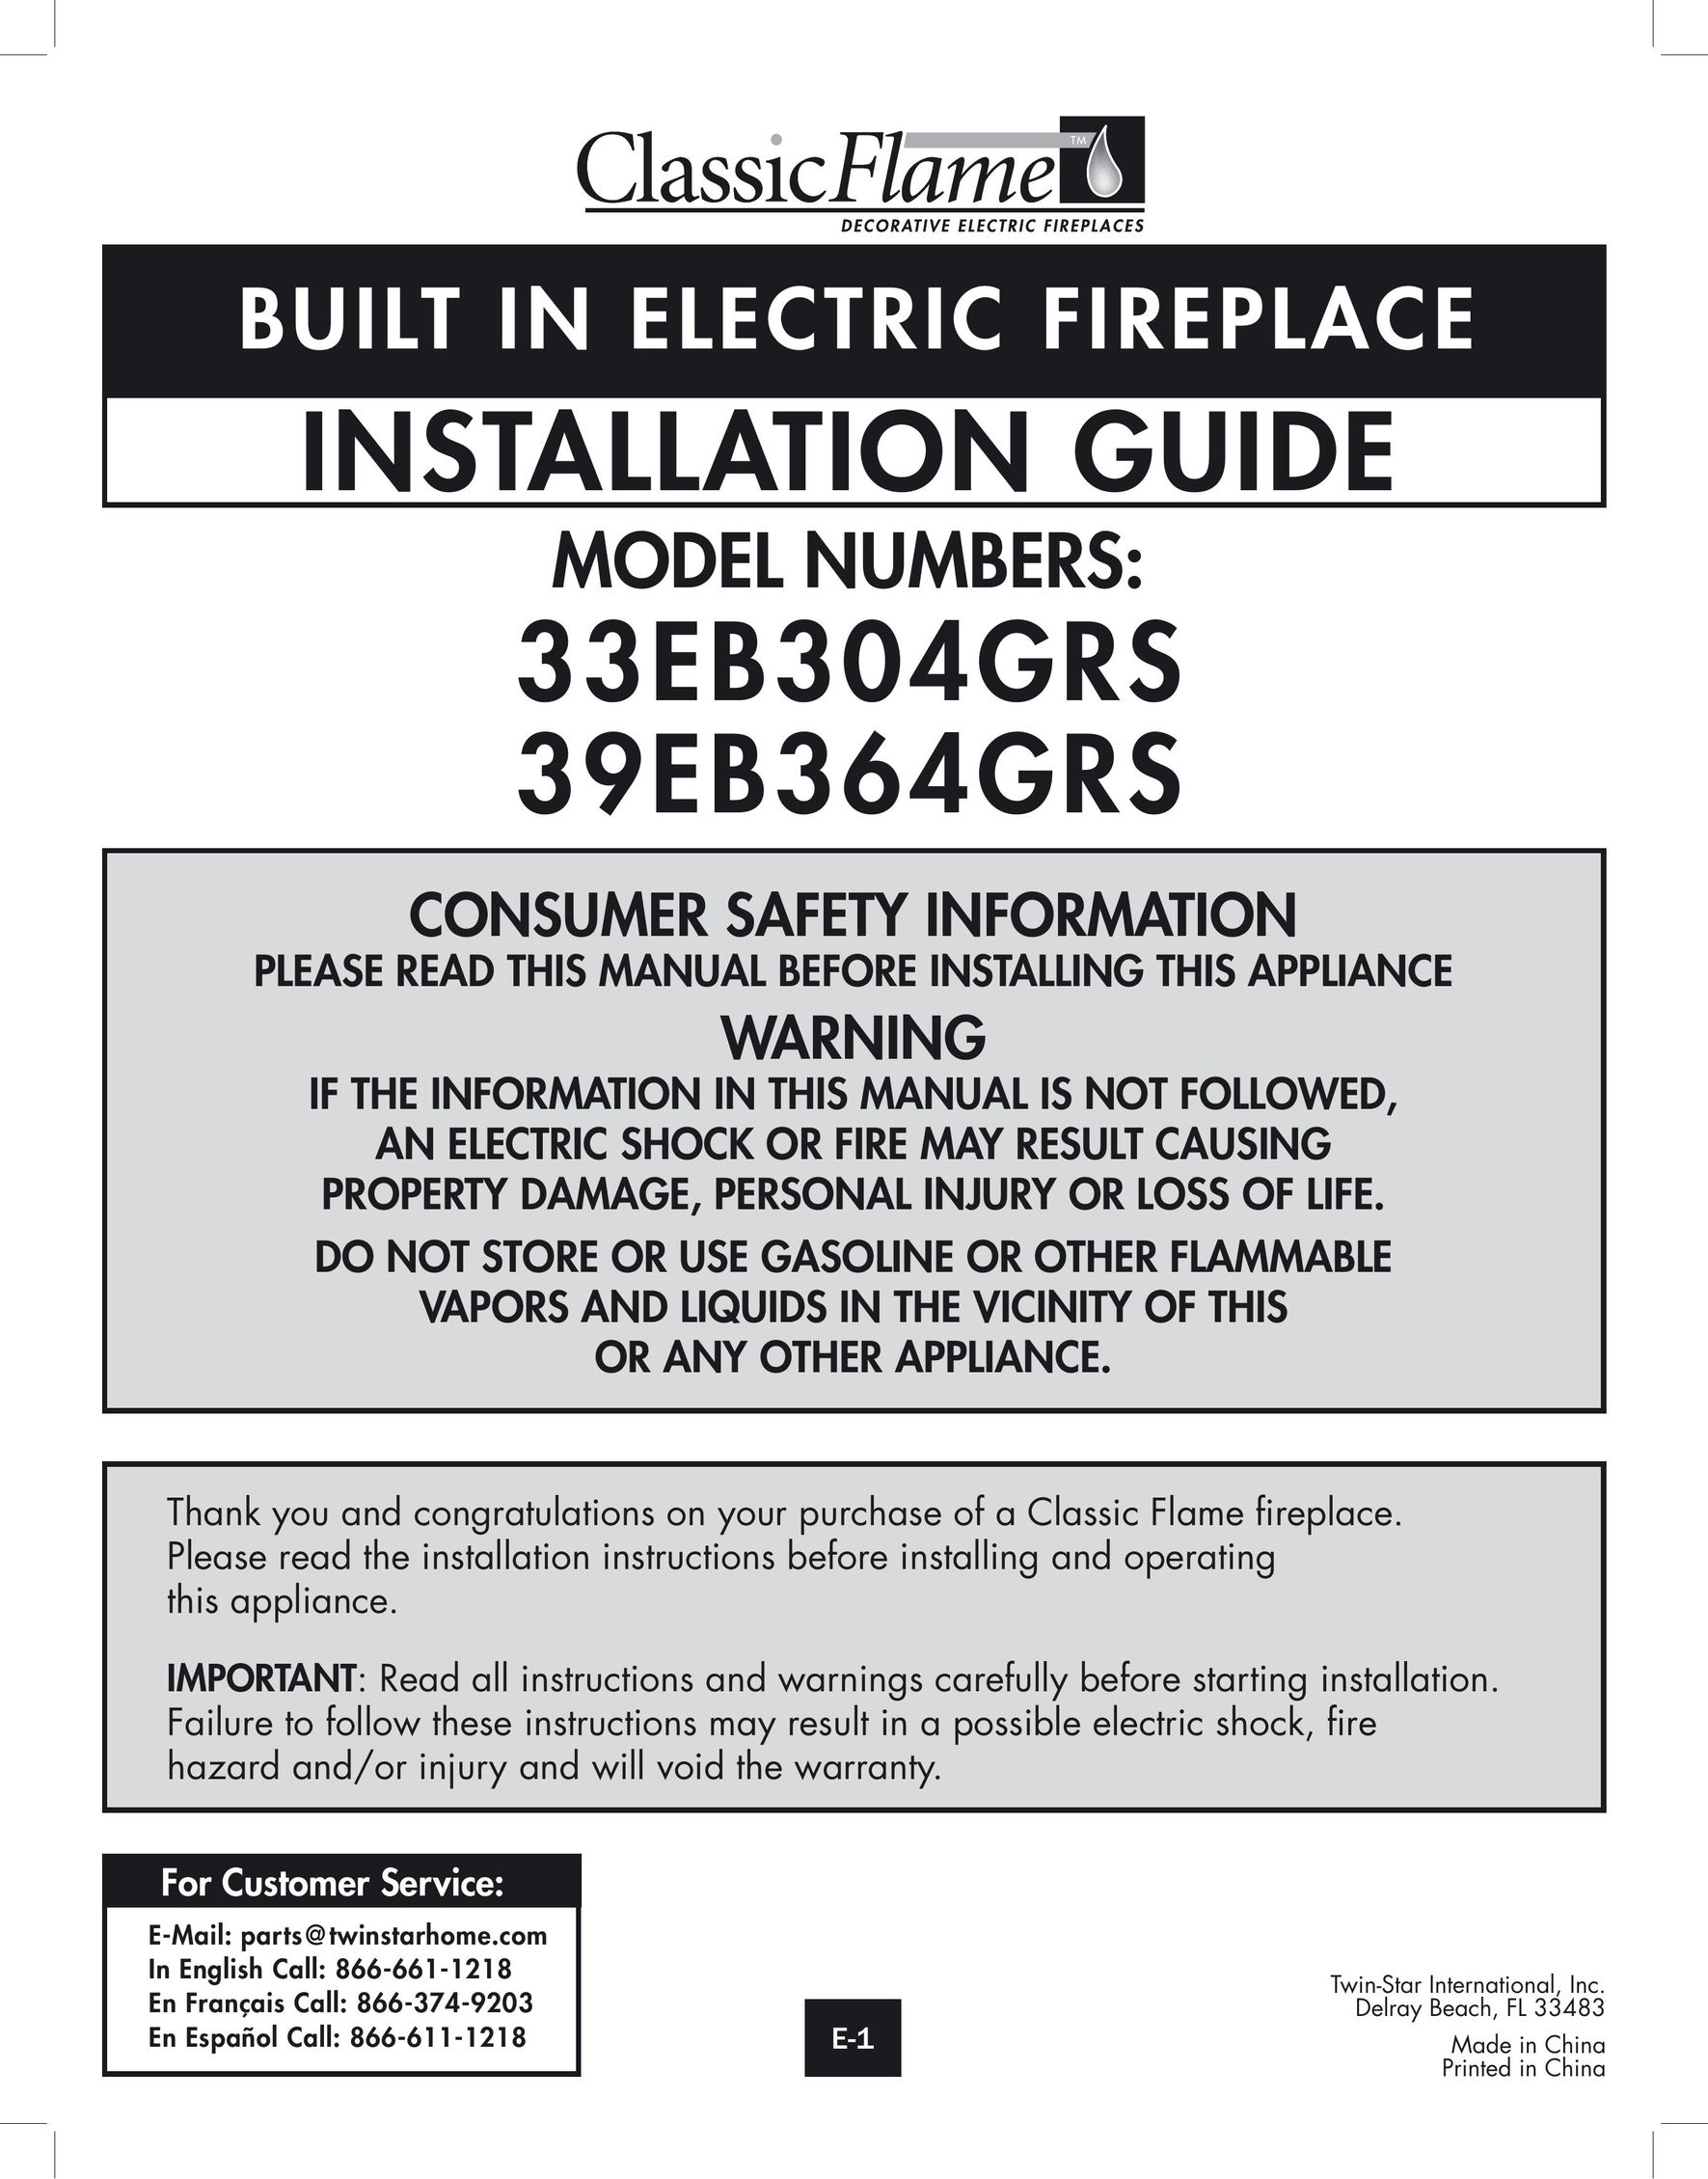 Twin-Star International 39EB364GRS Indoor Fireplace User Manual